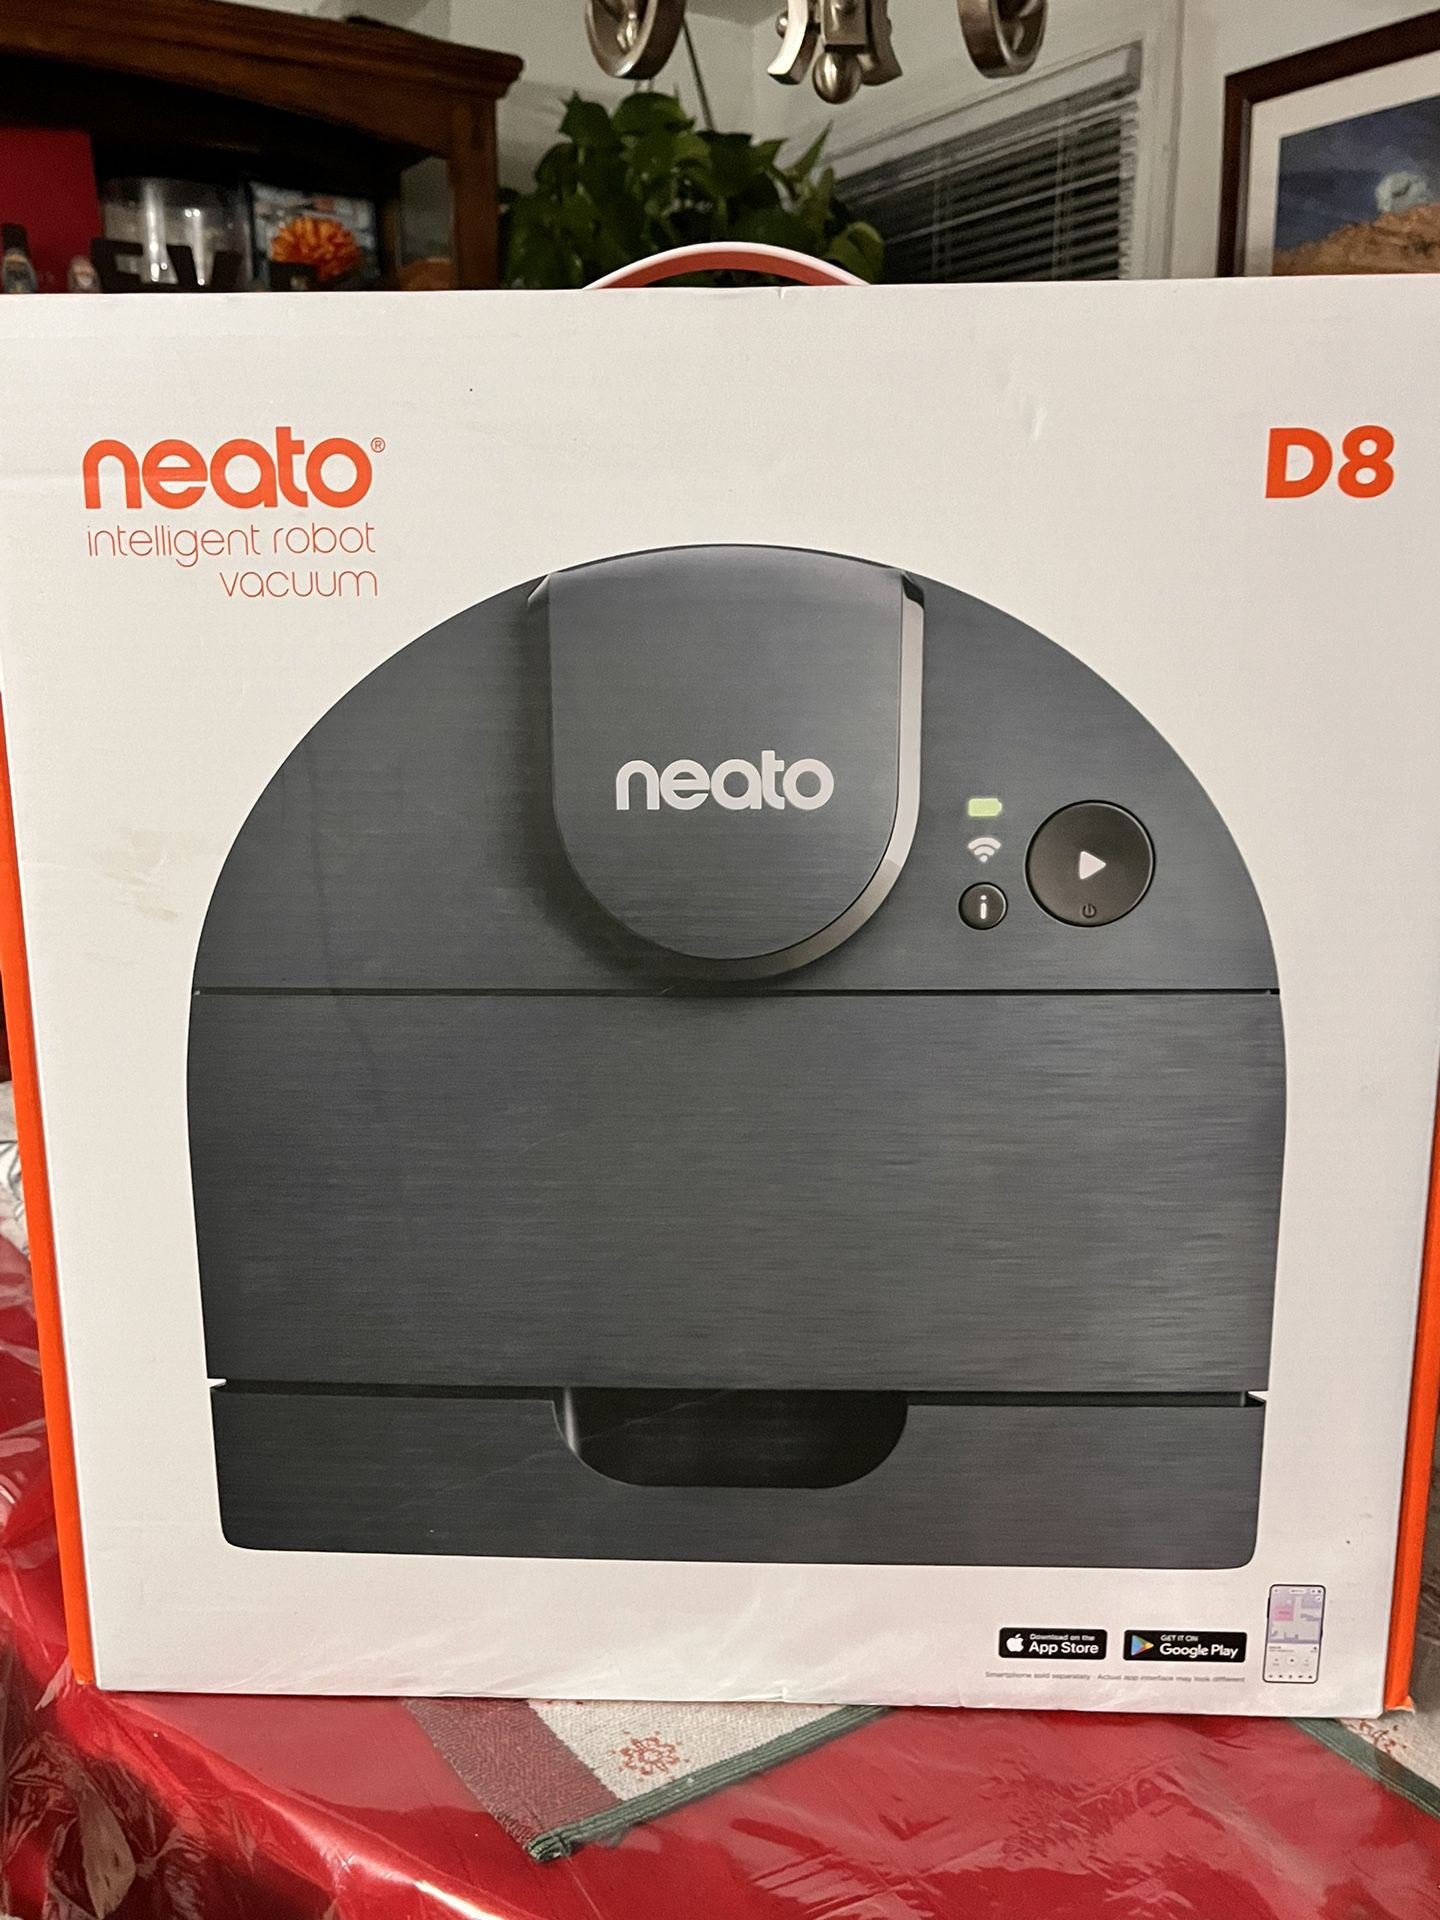 Neato D8 Intelligent Robot Vacuum